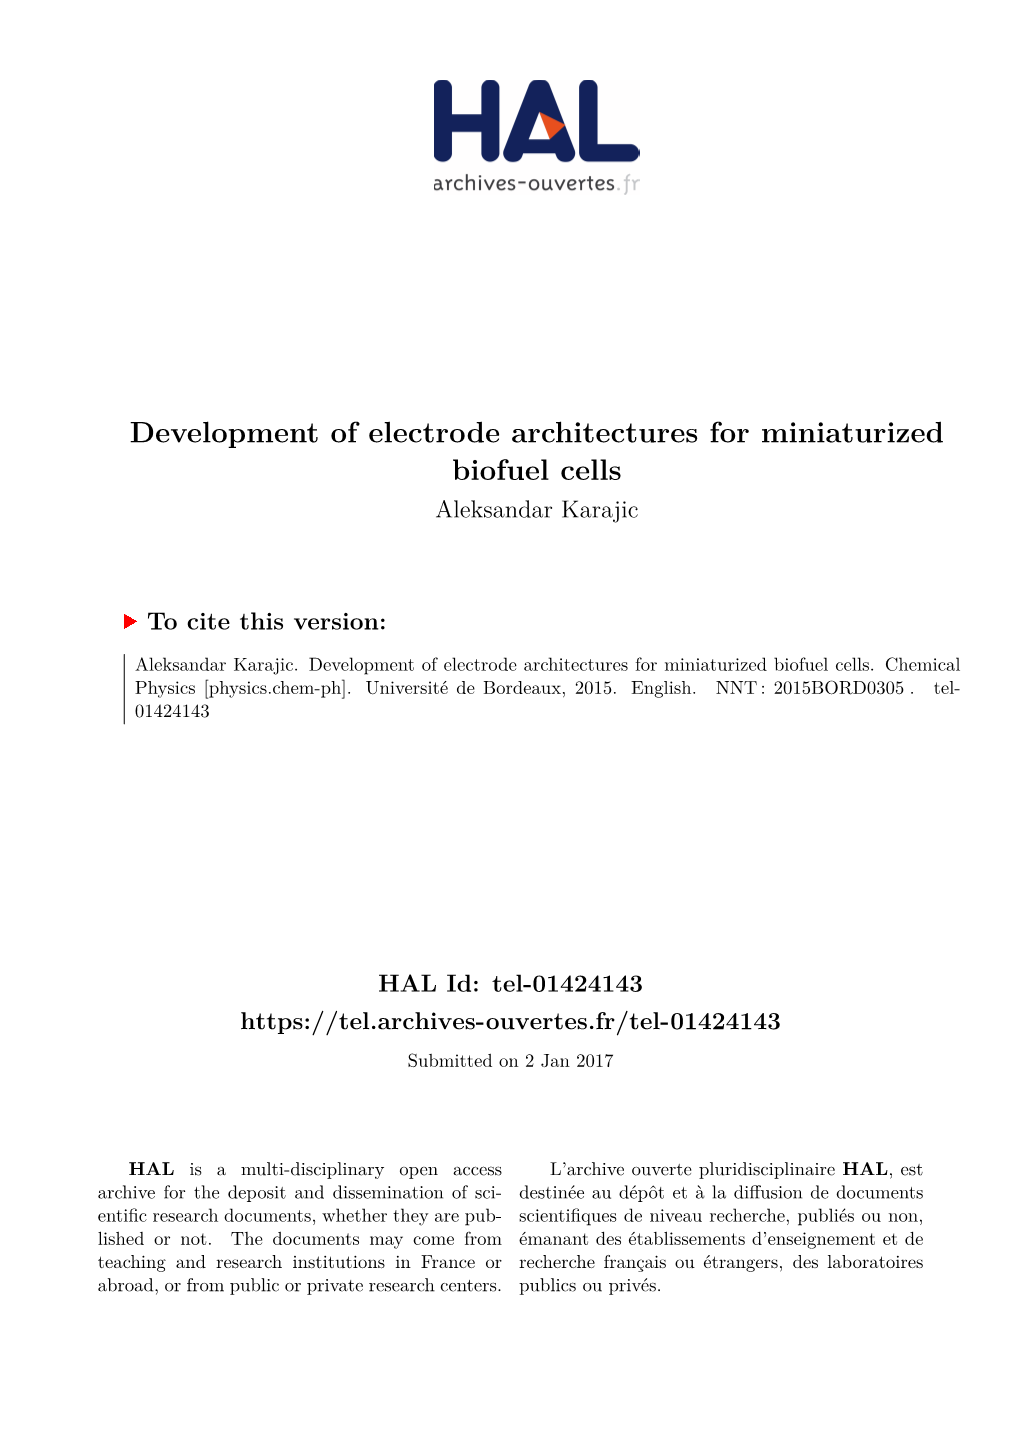 Development of Electrode Architectures for Miniaturized Biofuel Cells Aleksandar Karajic